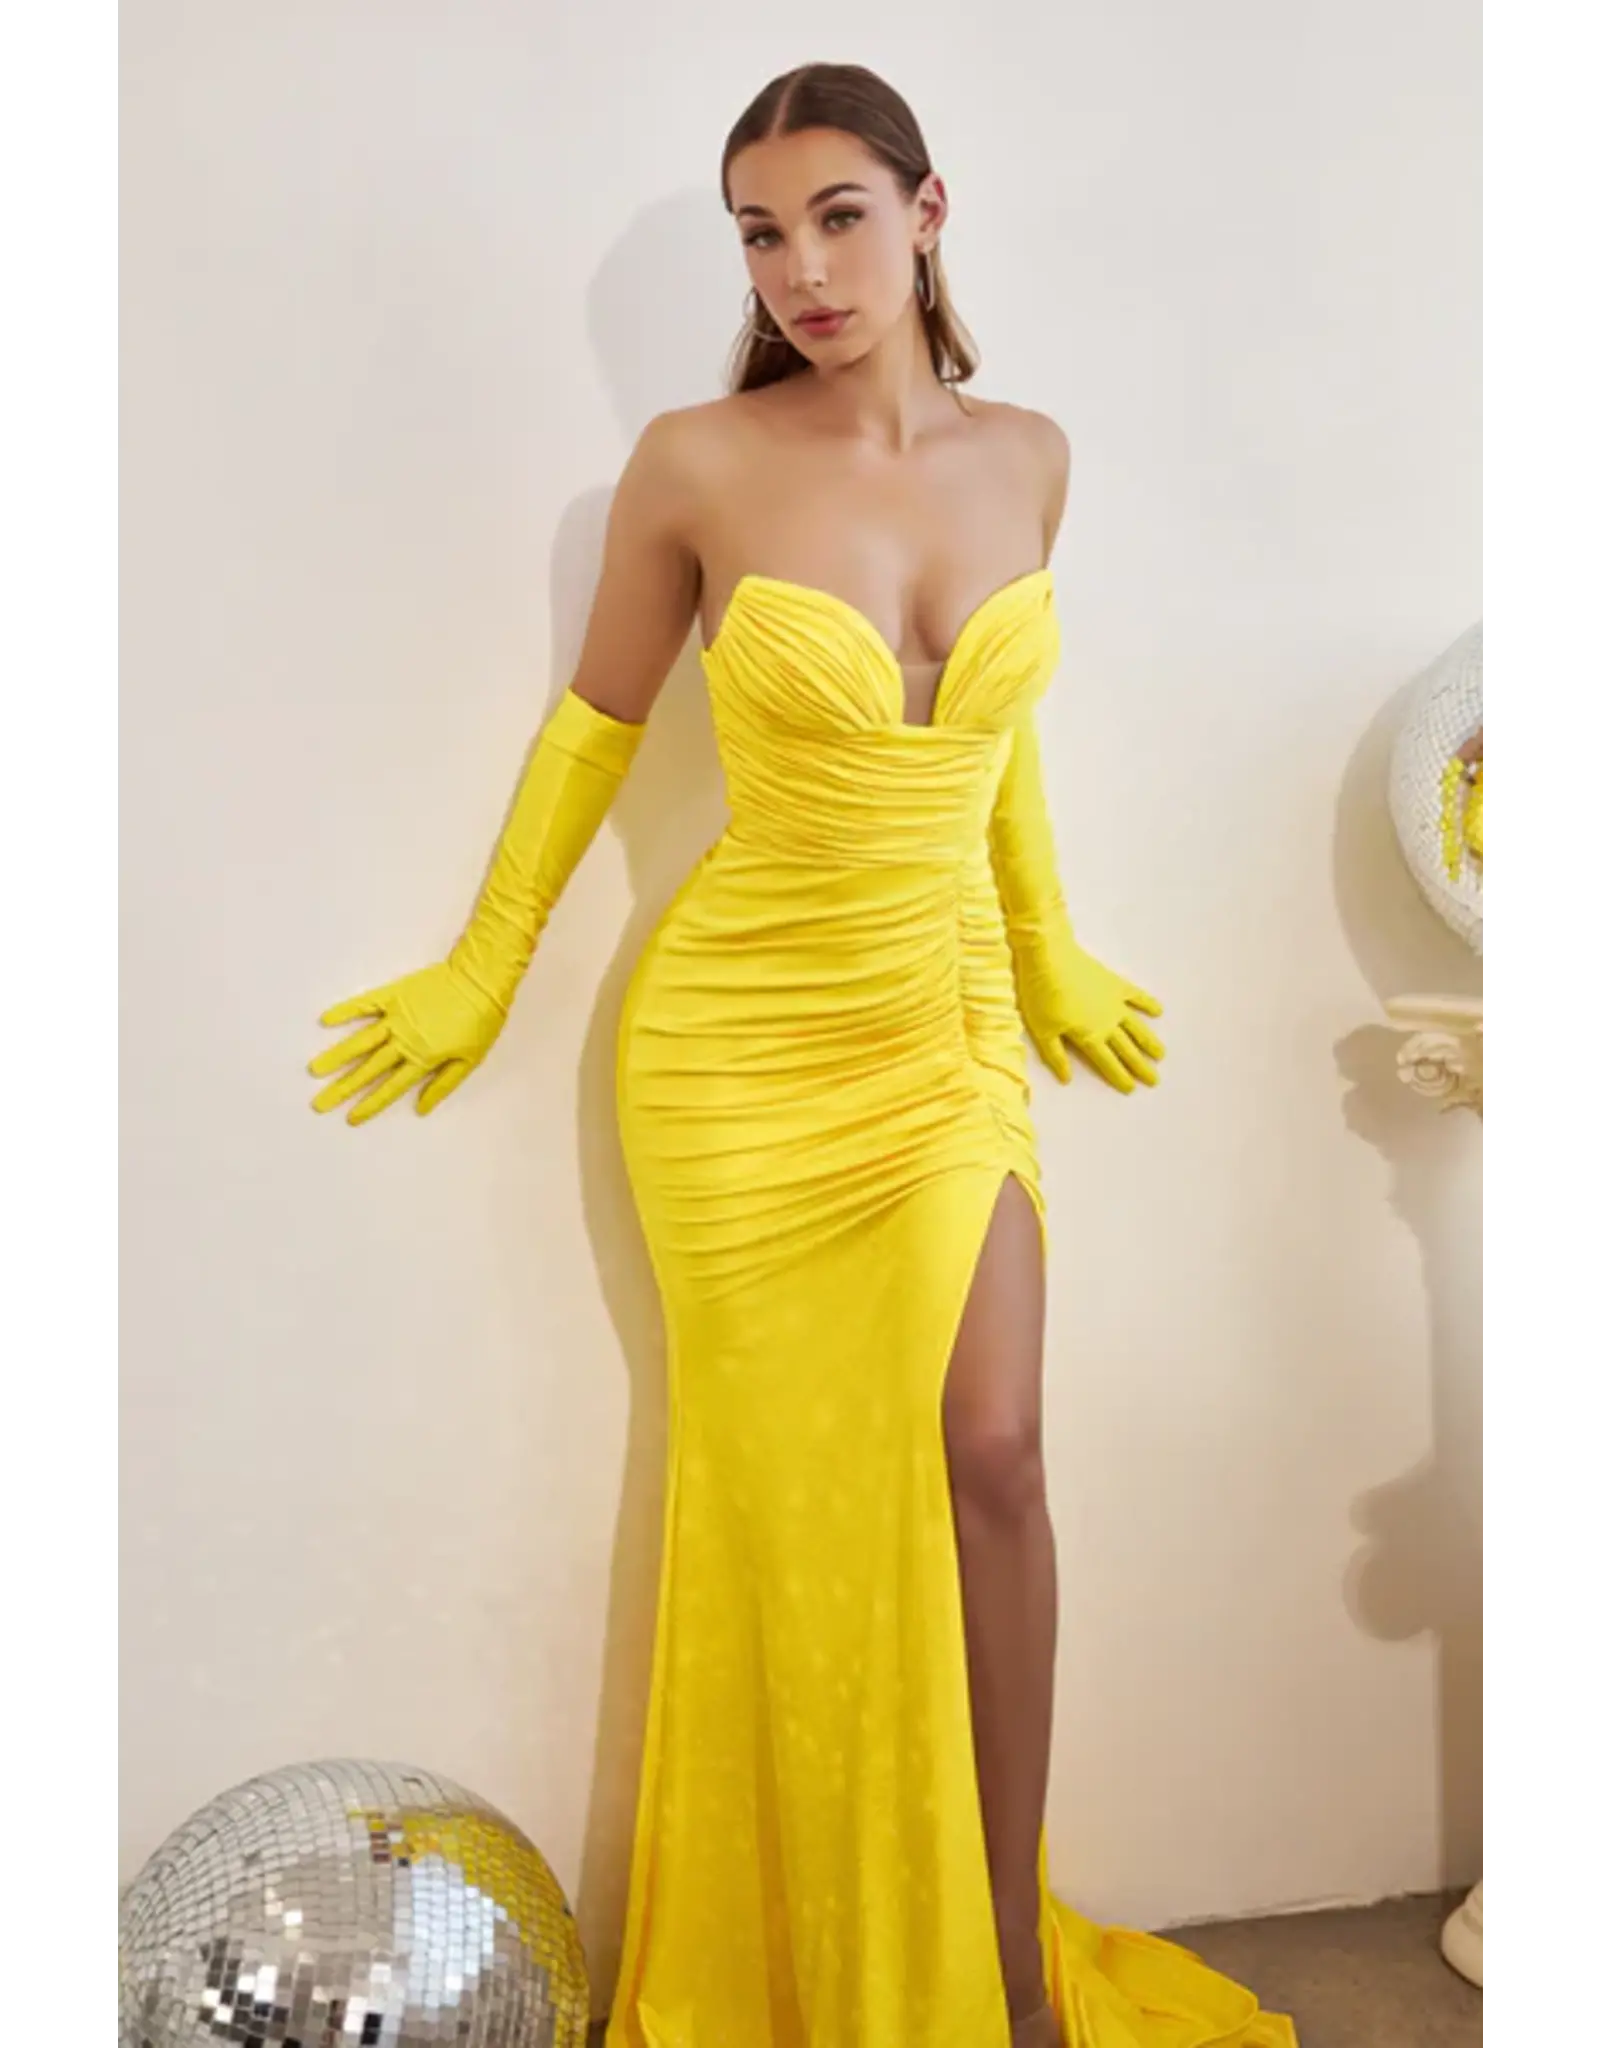 Yellow Glitter Long Formal Dress - 6